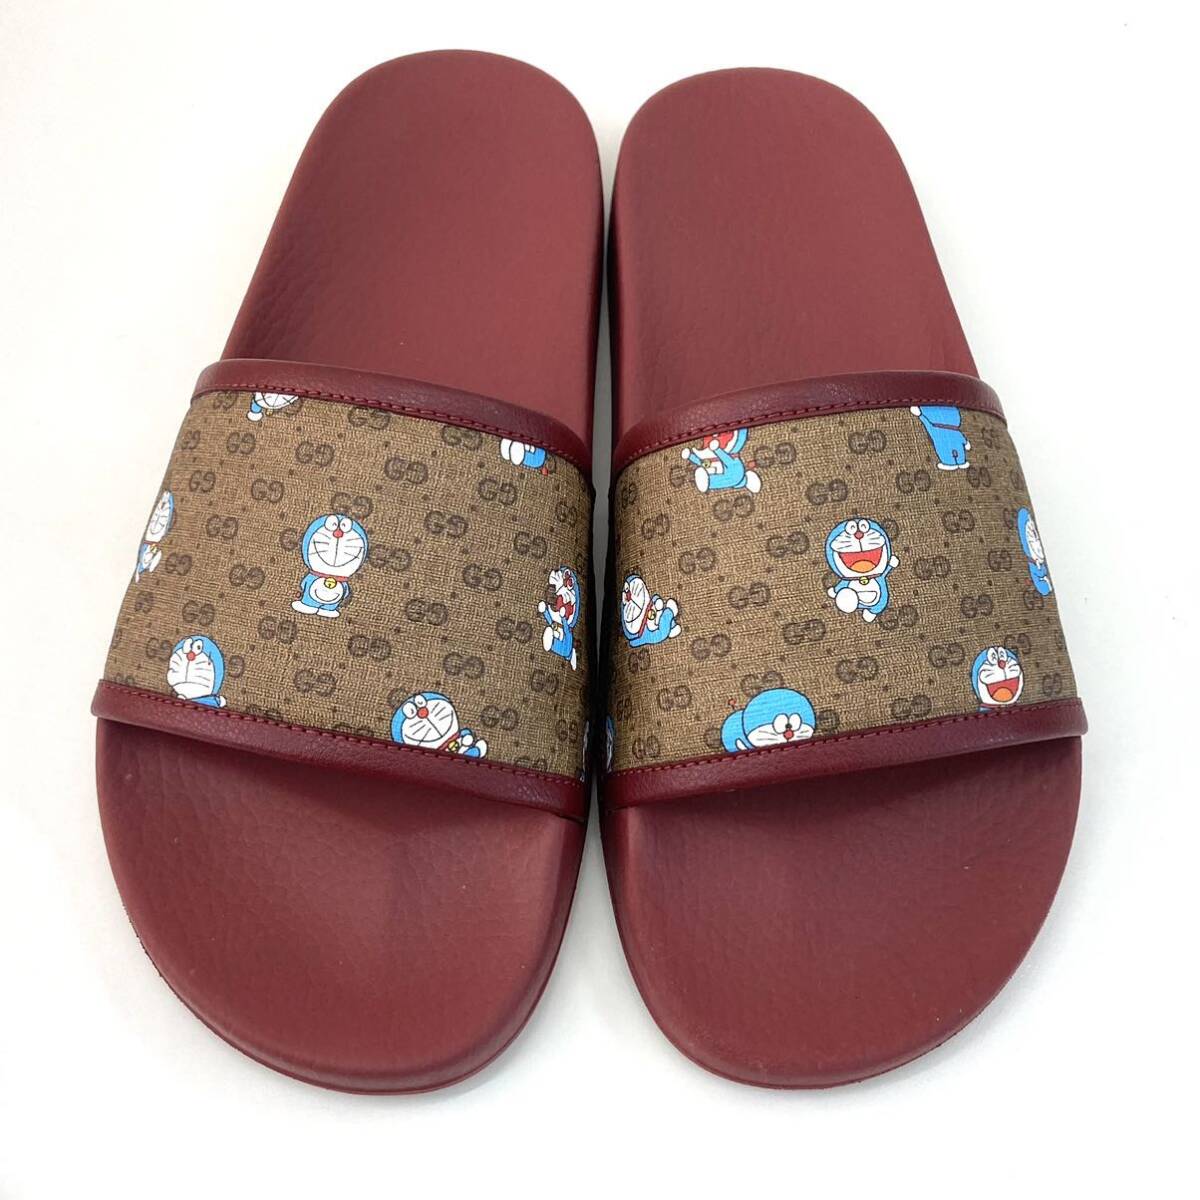 [ не использовался товар ]GUCCI Gucci обувь Doraemon Doraemon Flat шлепанцы для душа Raver размер 9 a194